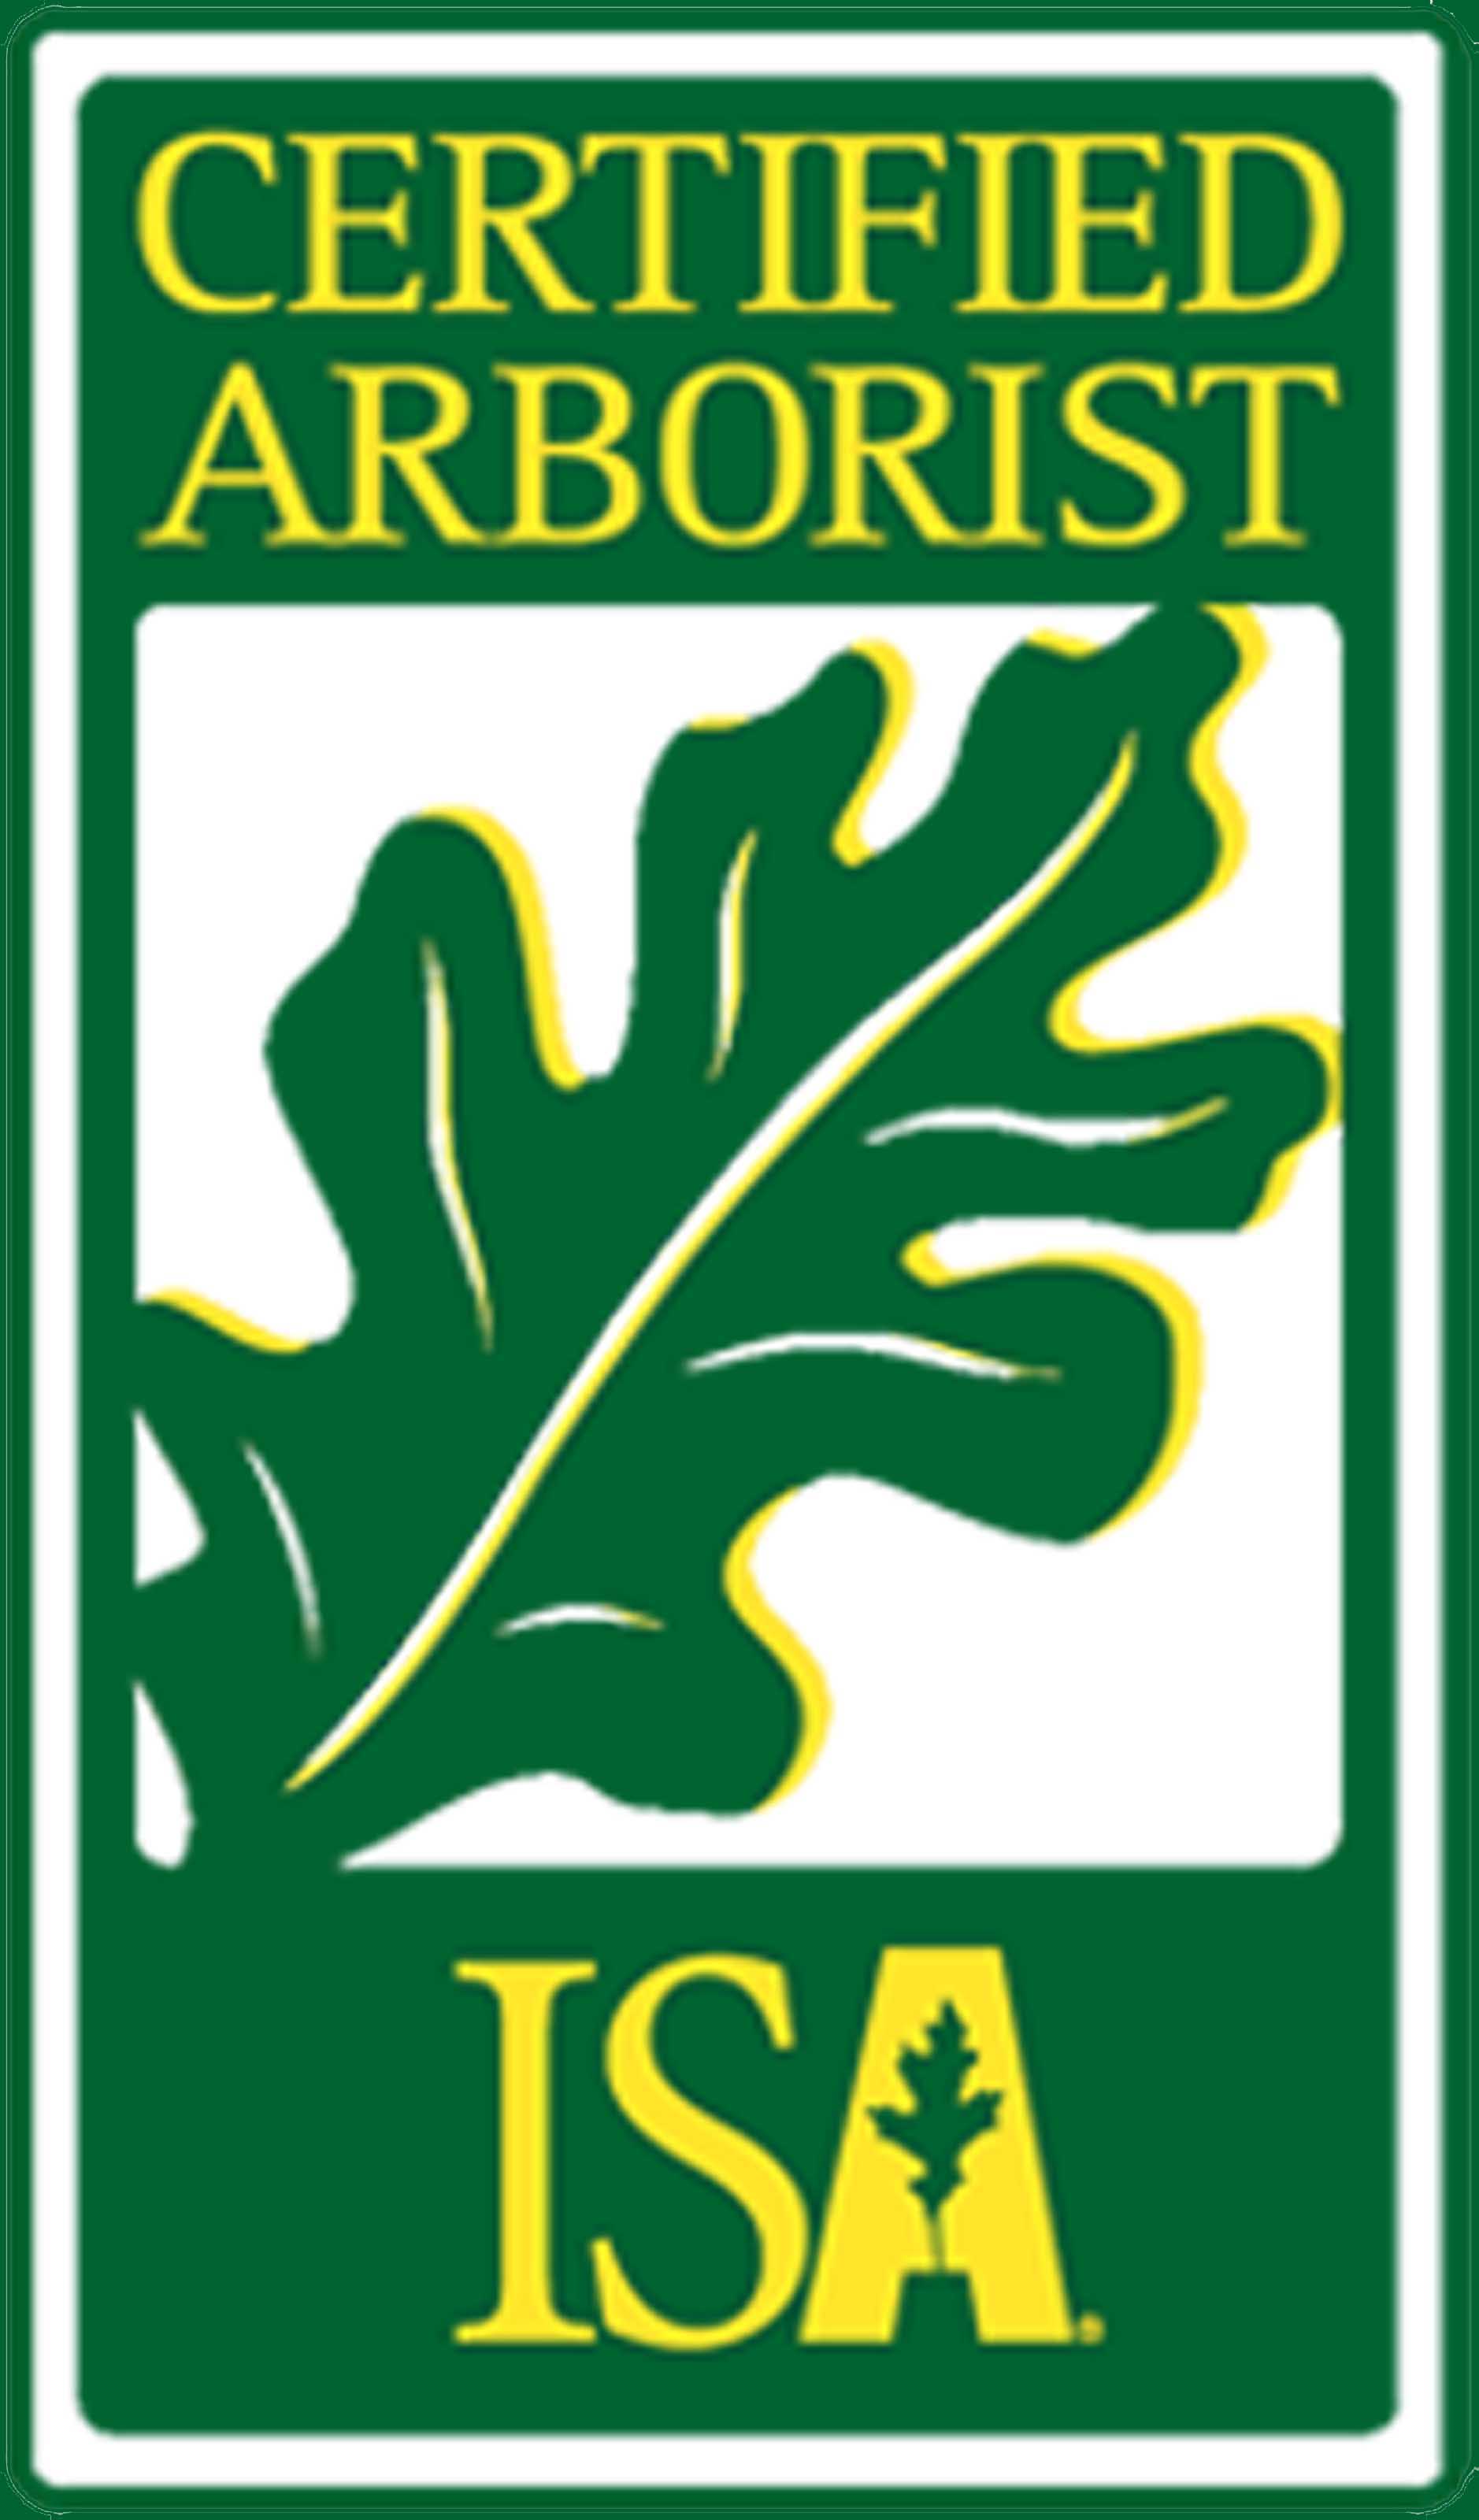 International Society of Arboriculture Certified Arborist Logo photo - 1